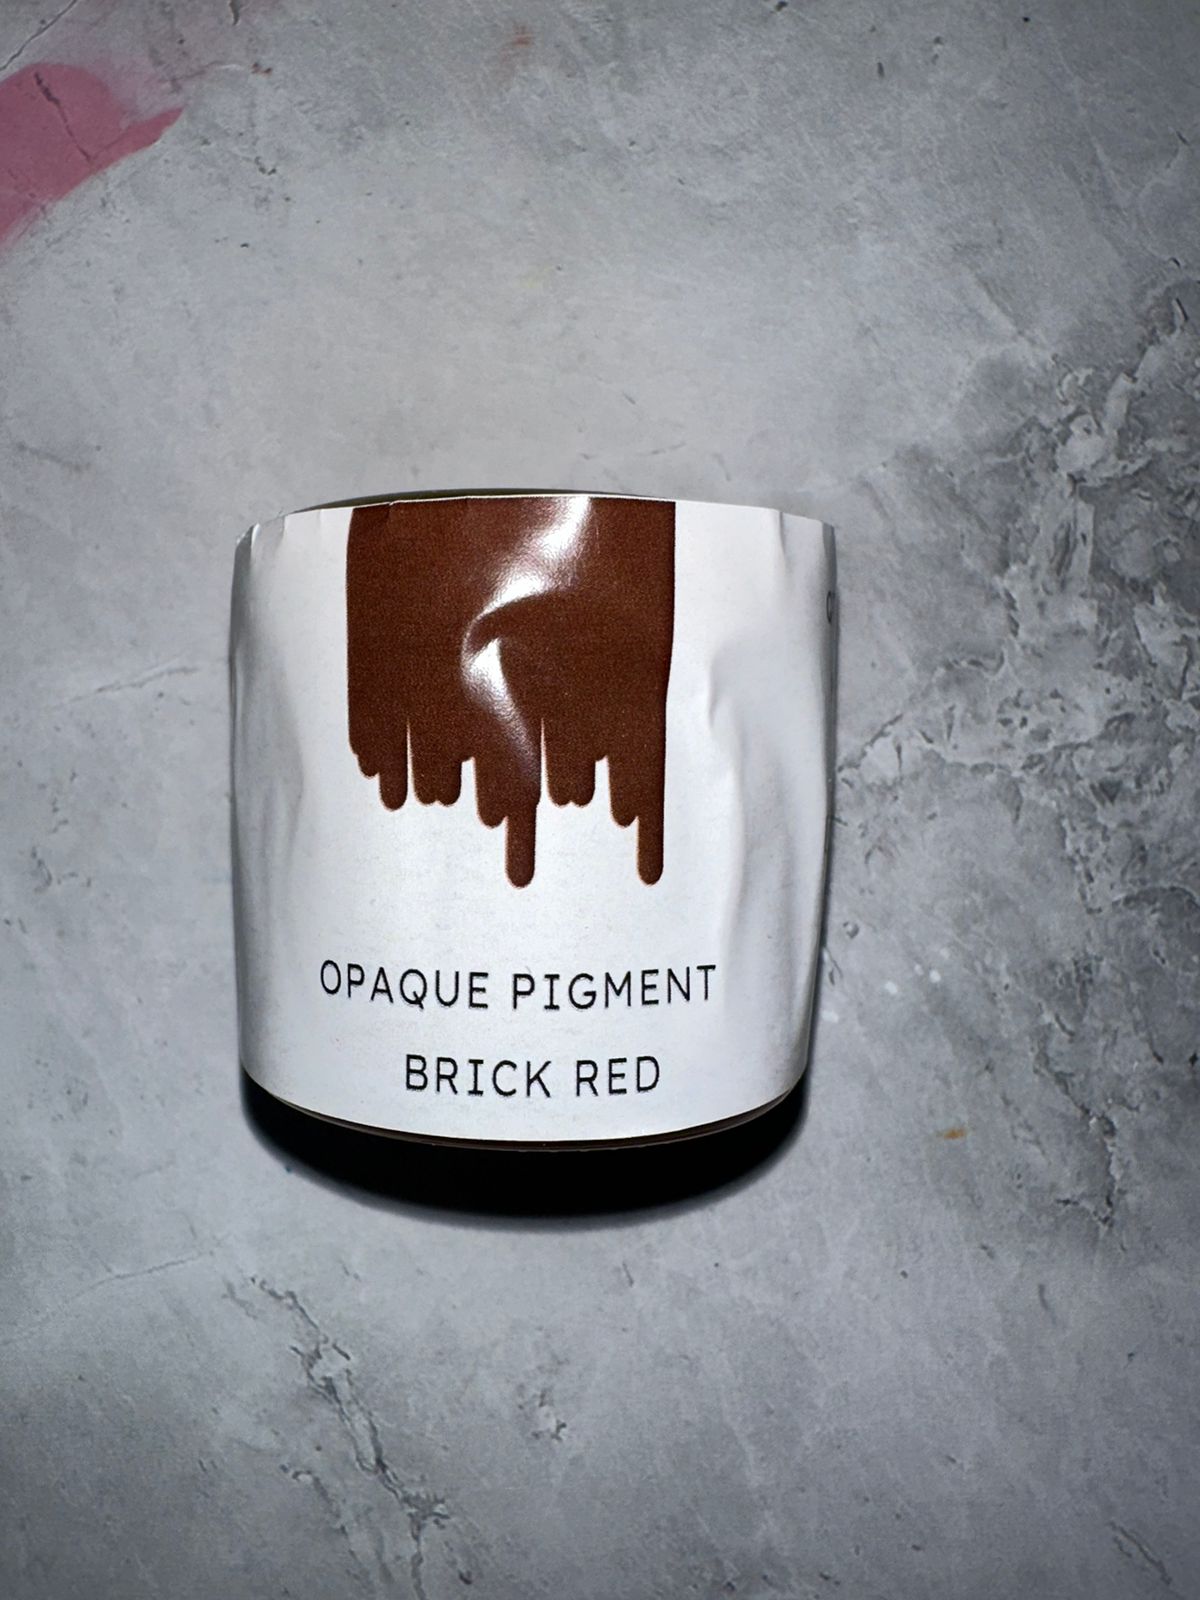 Brick red opaque